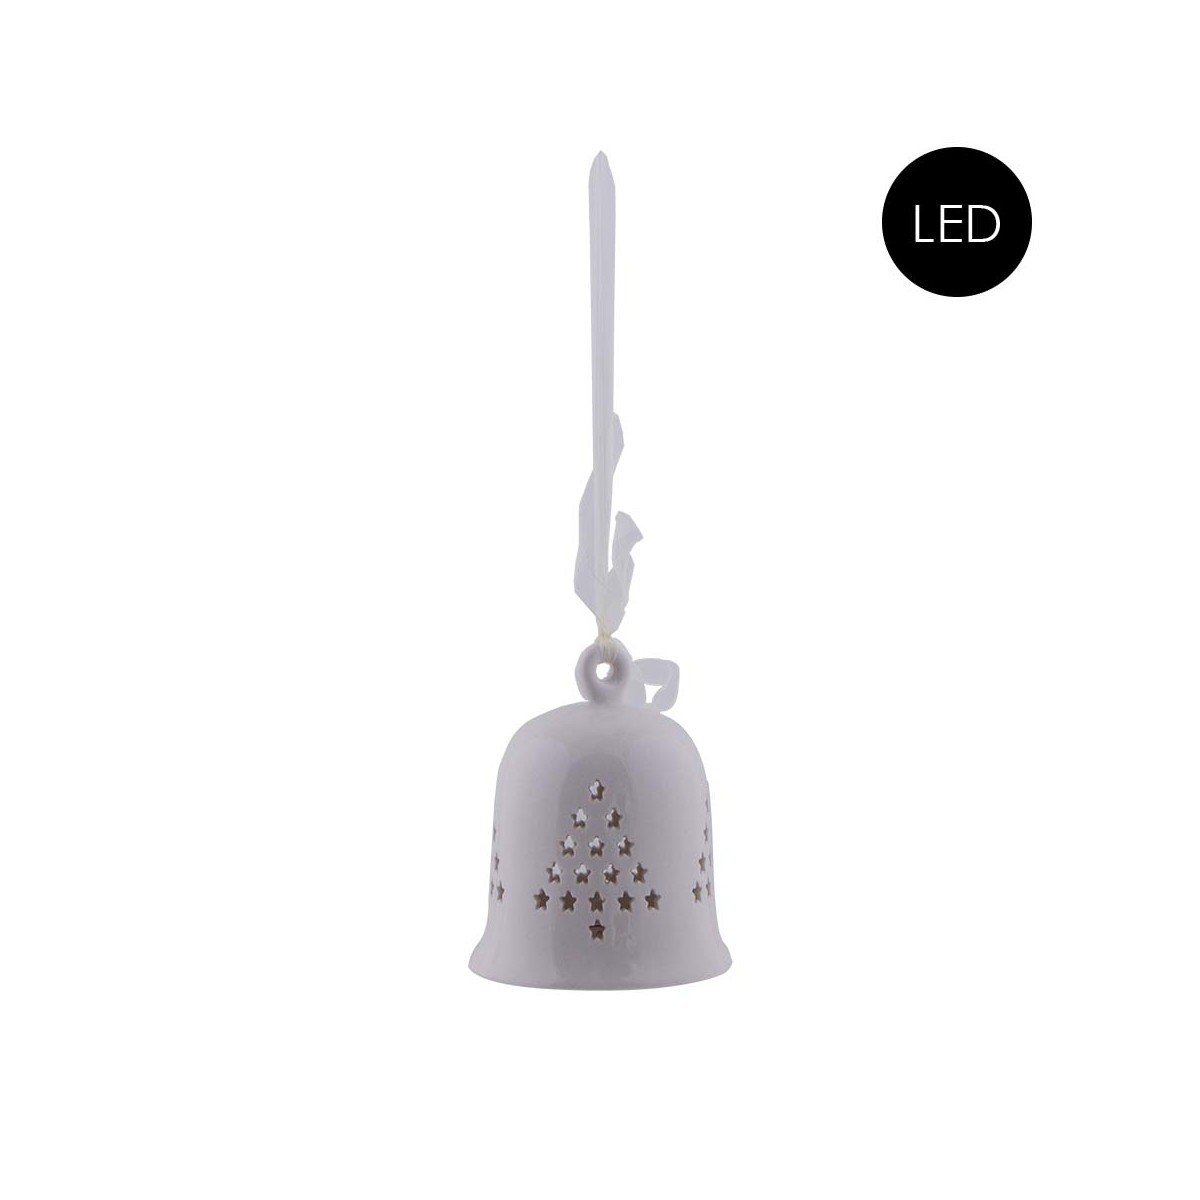 Porzellan Glocke mit LED Beleuchtung Größe L